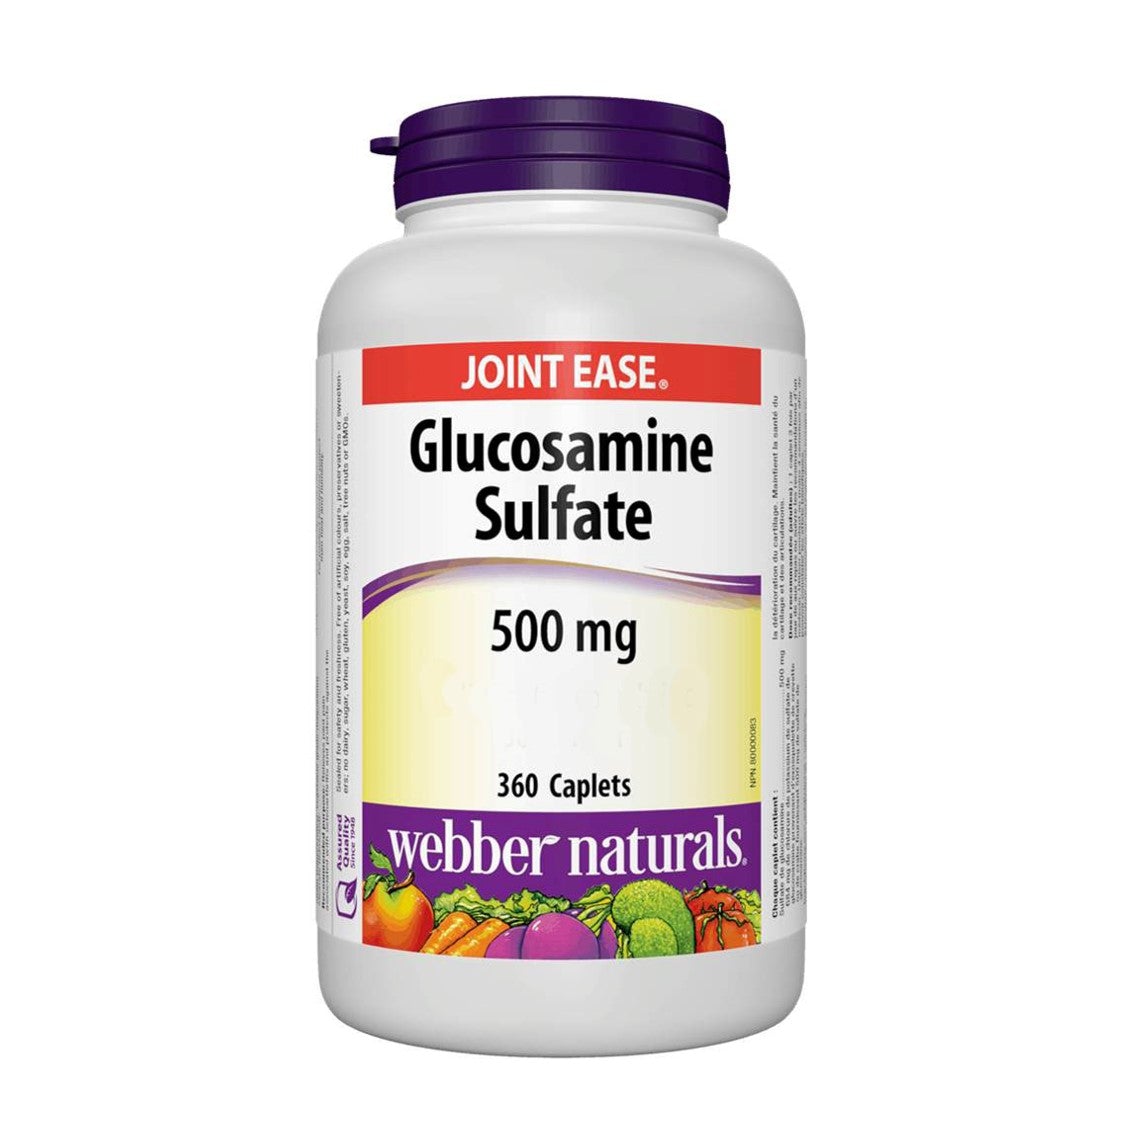 webber-naturals-glucosamine-sulfate-500mg-360caplets